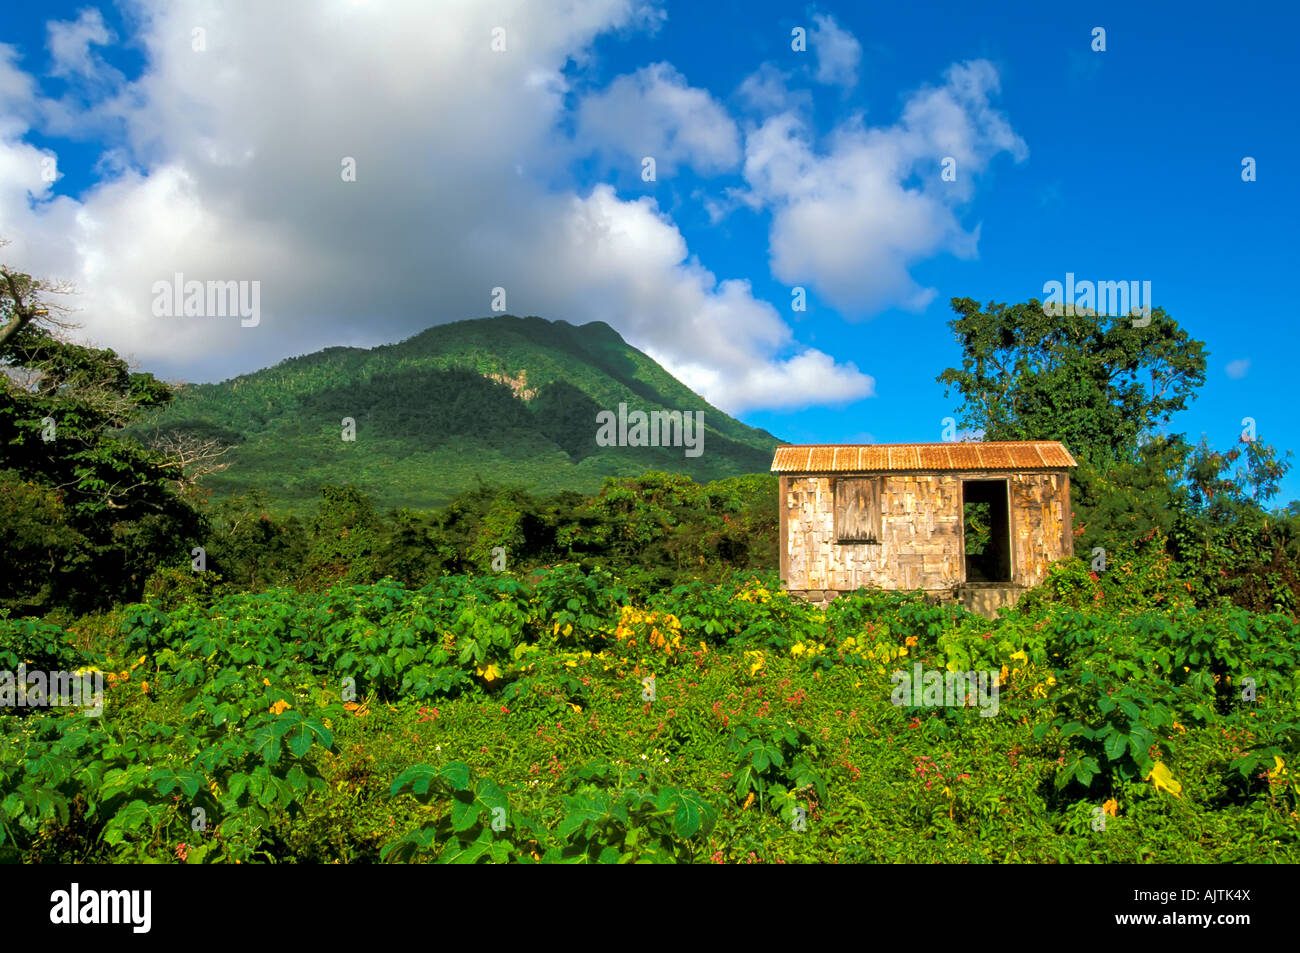 Mount Nevis, grünen Vulkan-Gipfel, offenen Feldern, Insel Nevis, St. Kitts und Nevis, Karibik Insel tropische Idylle Stockfoto